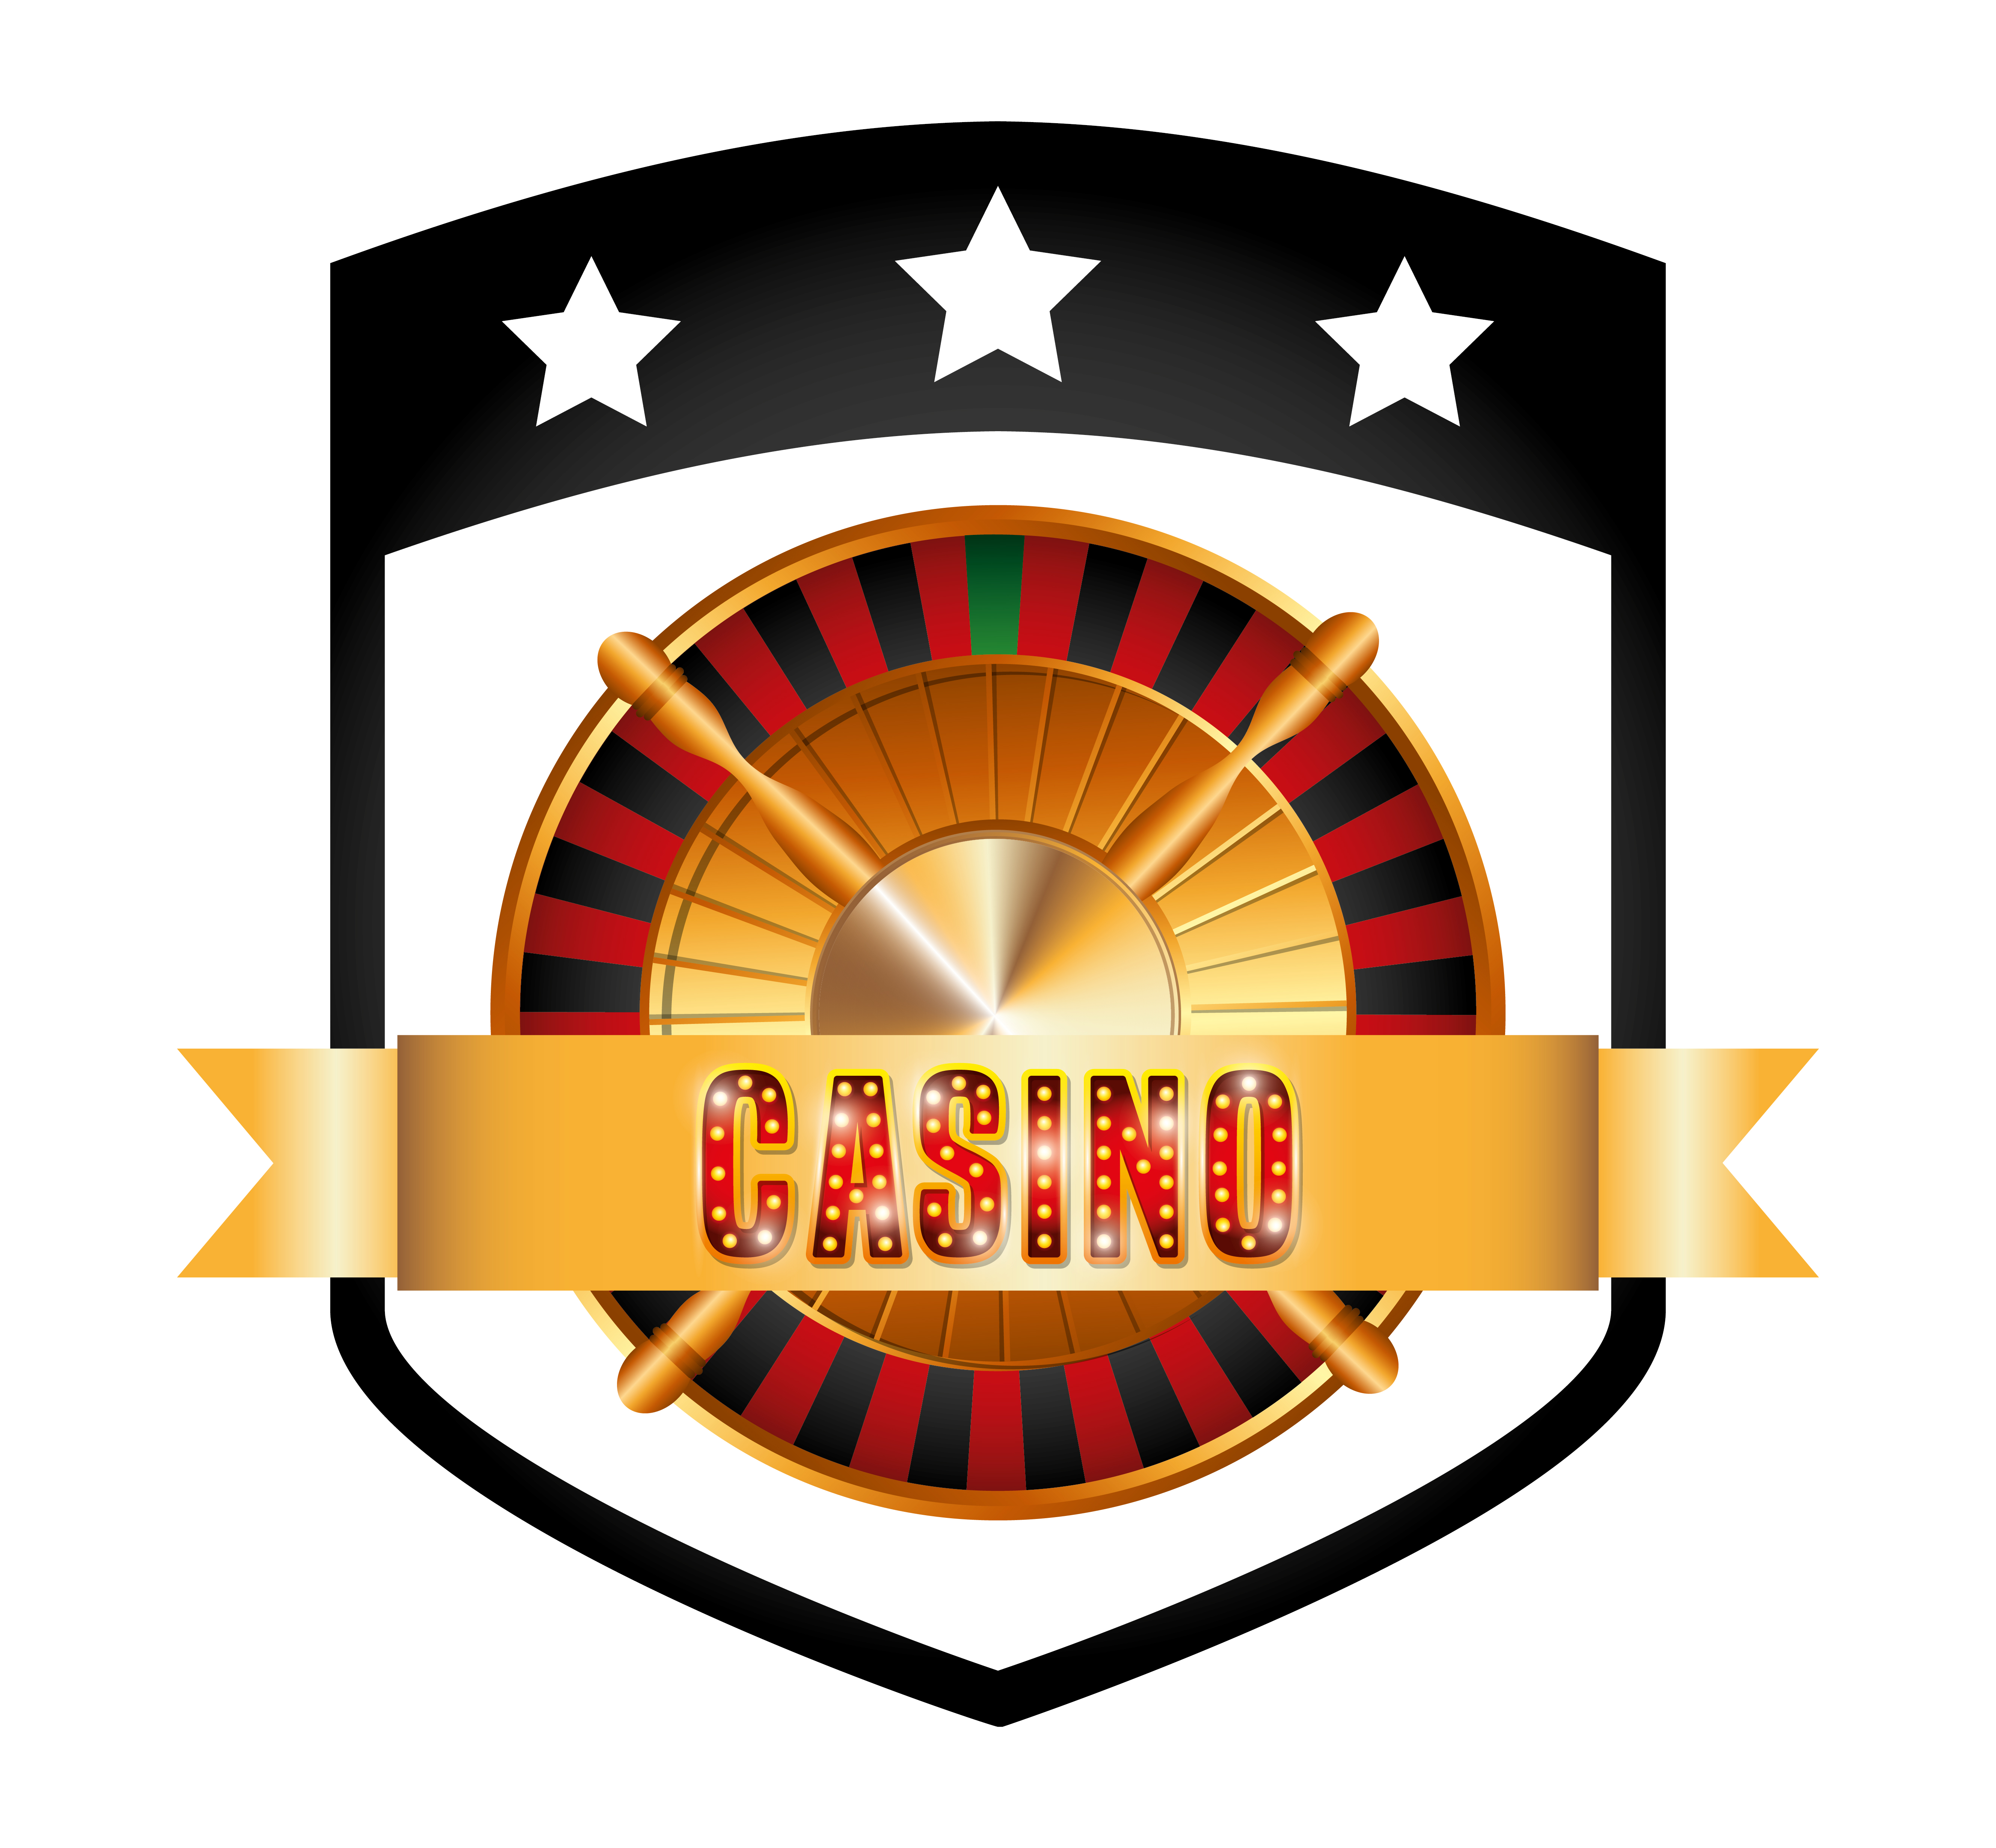 online casino singapore